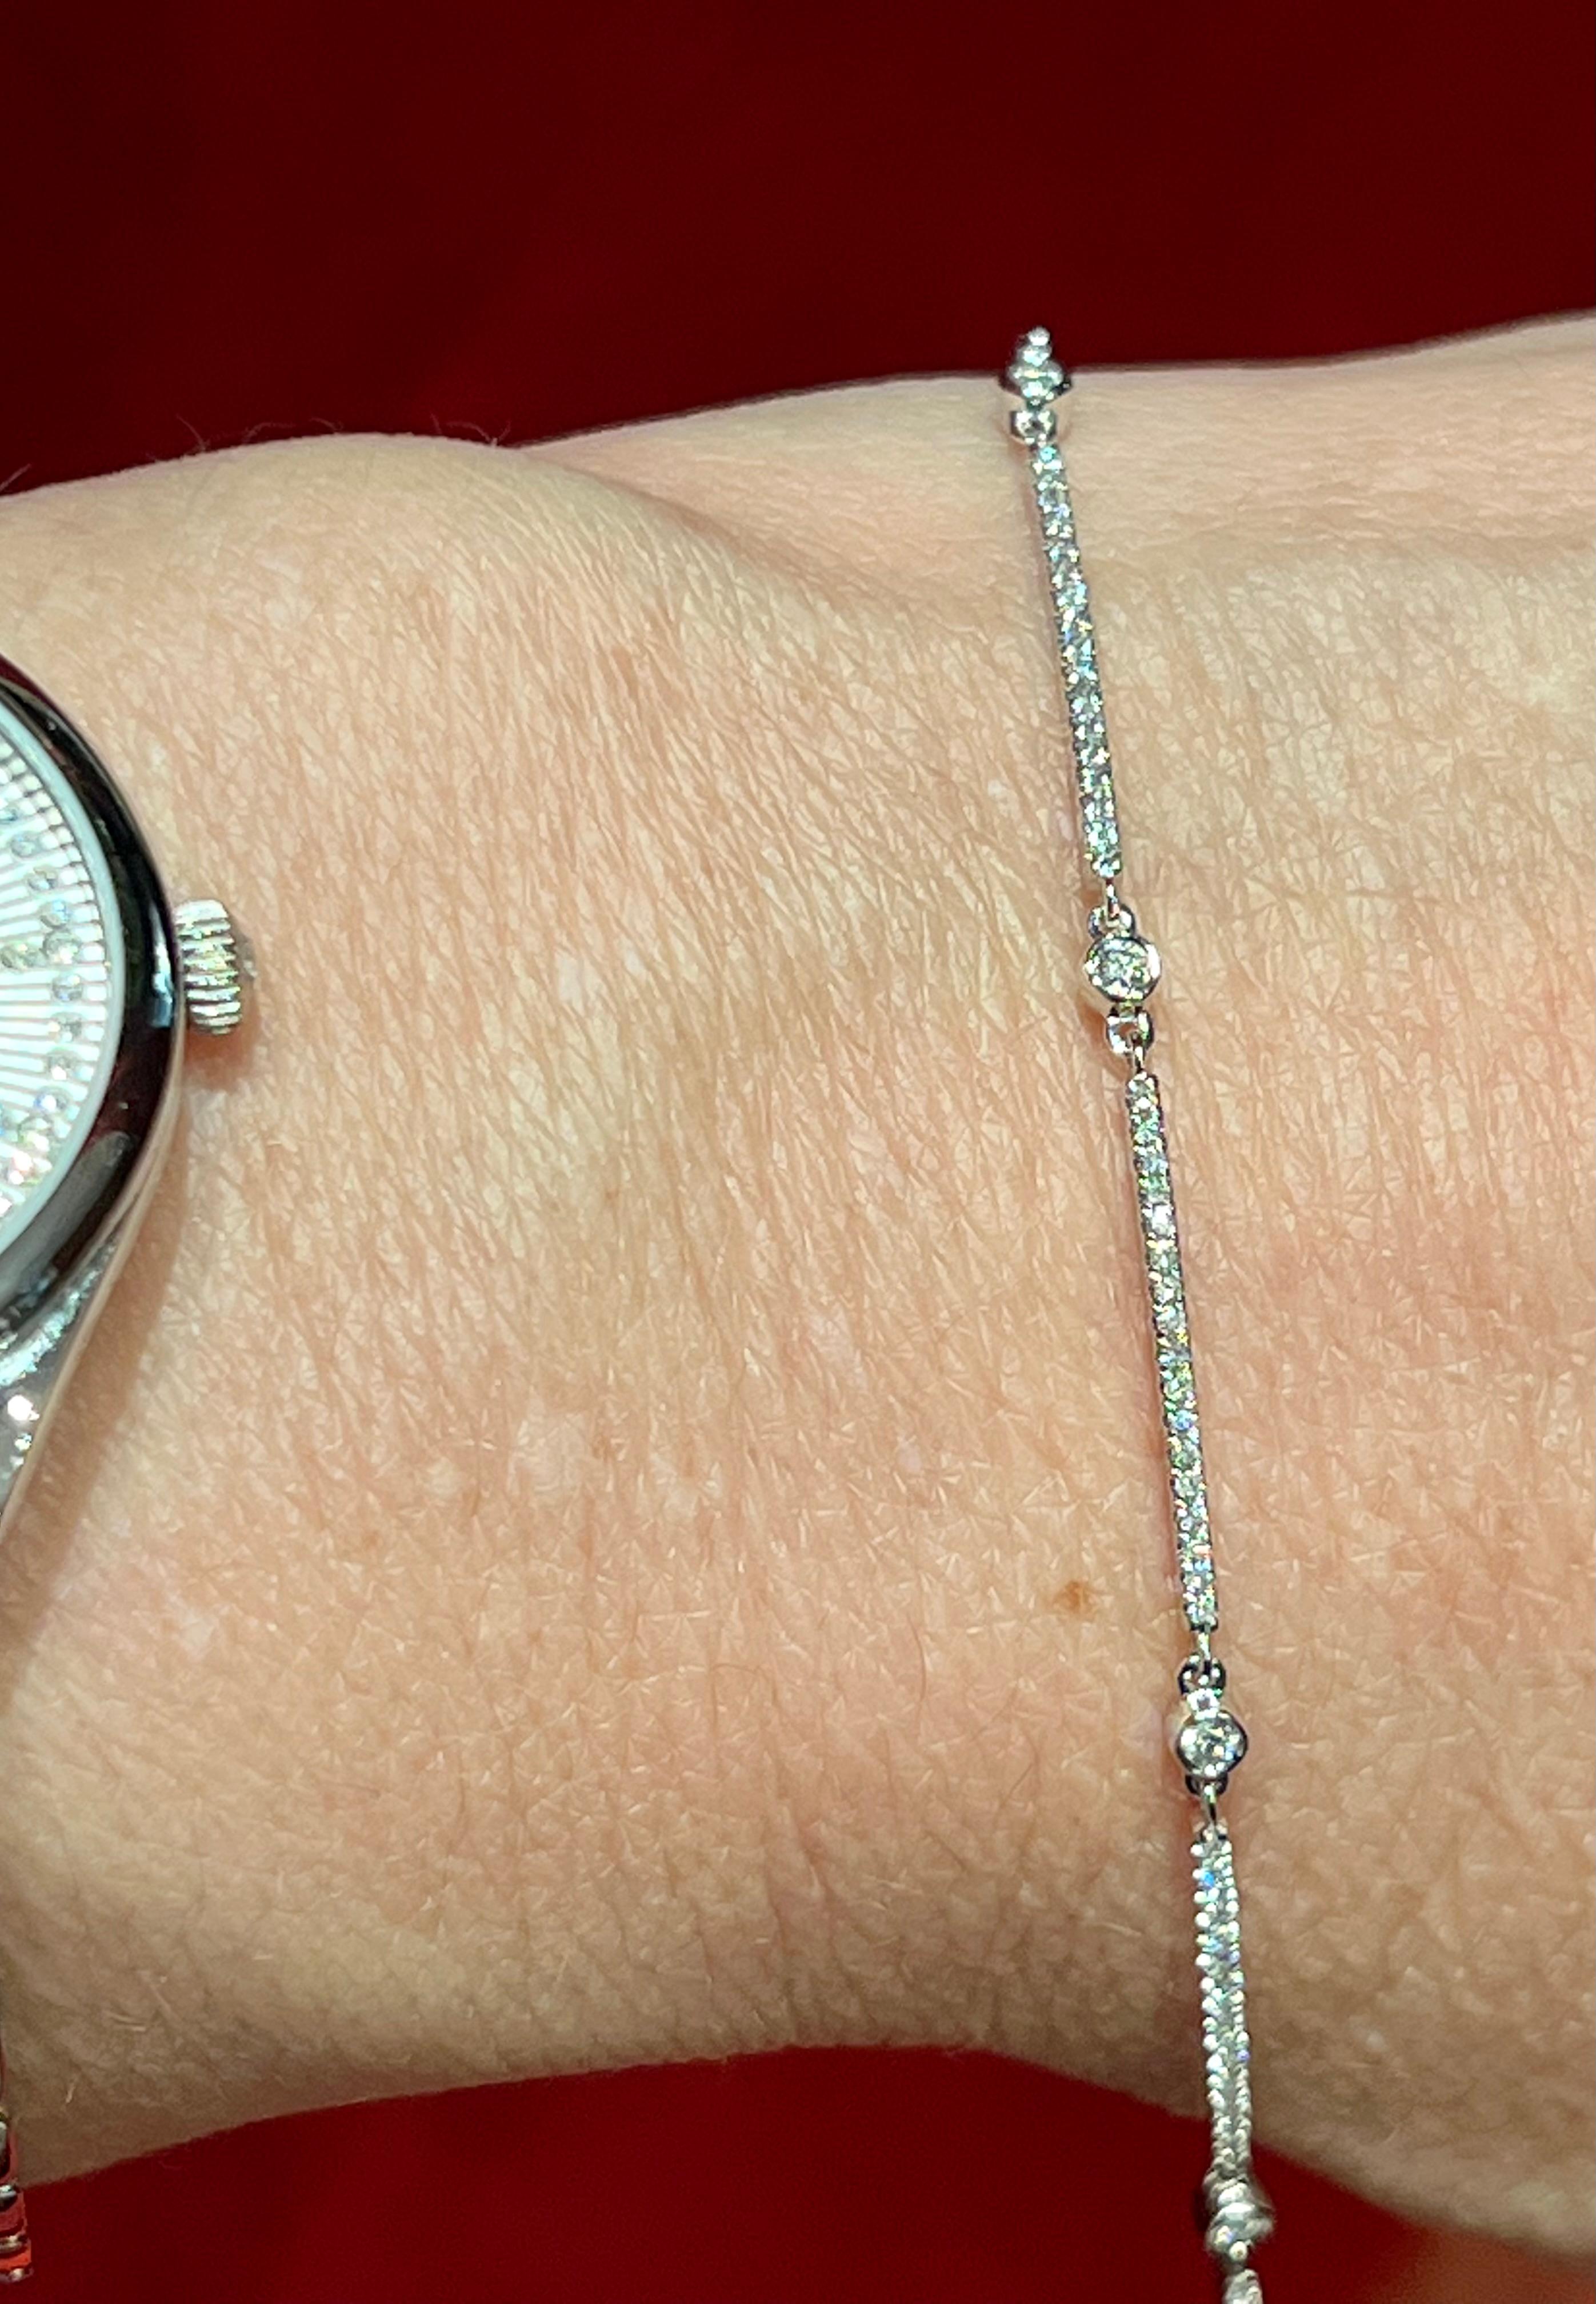 18-Carat White Gold Tennis Bracelet, Paving with Modern-Cut Diamonds 1